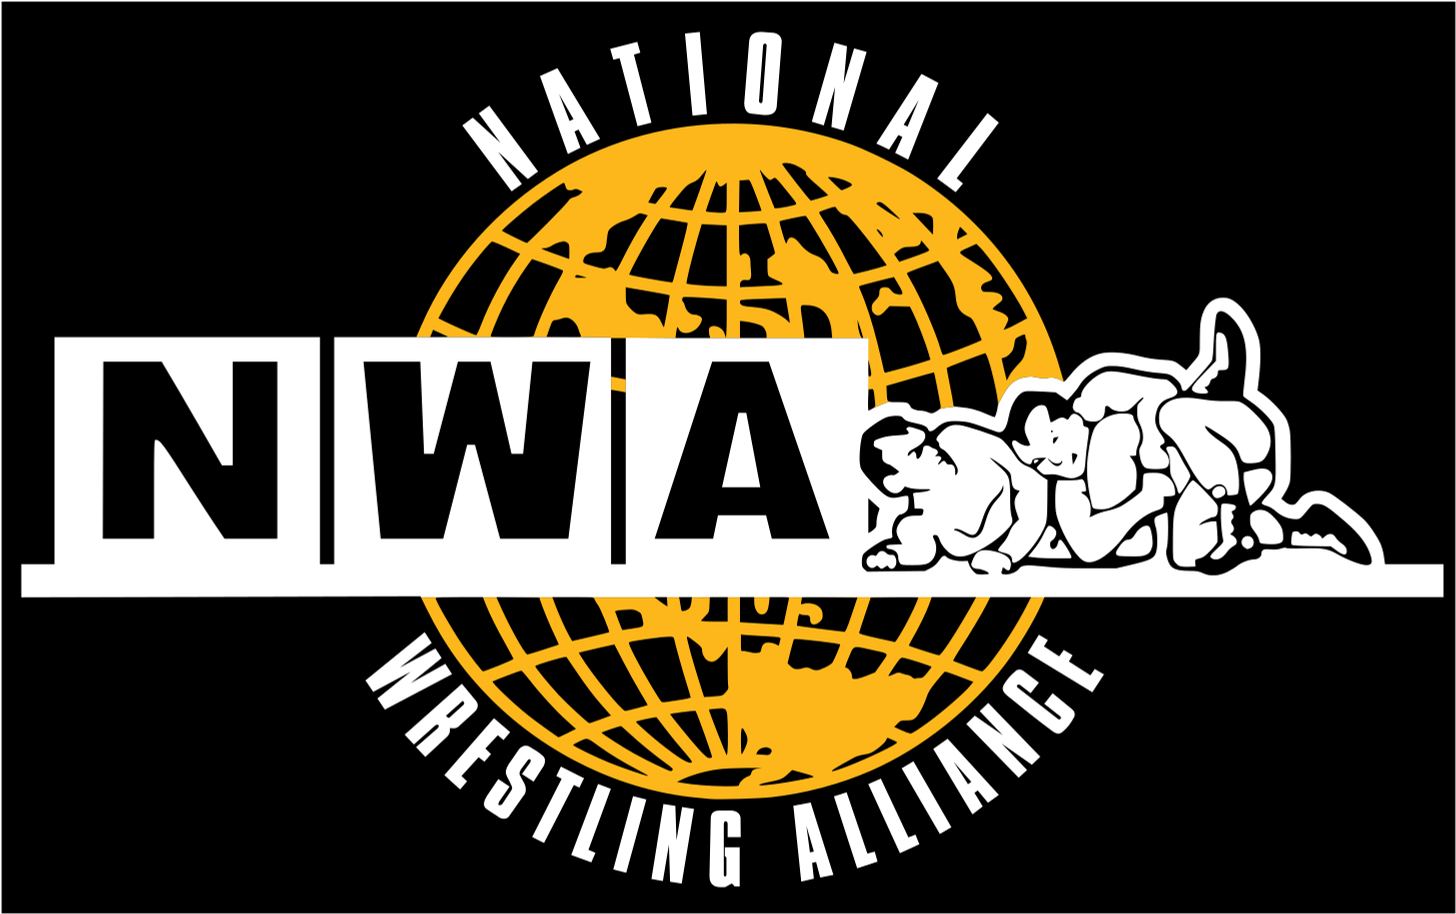 National Wrestling Alliance - Wikipedia